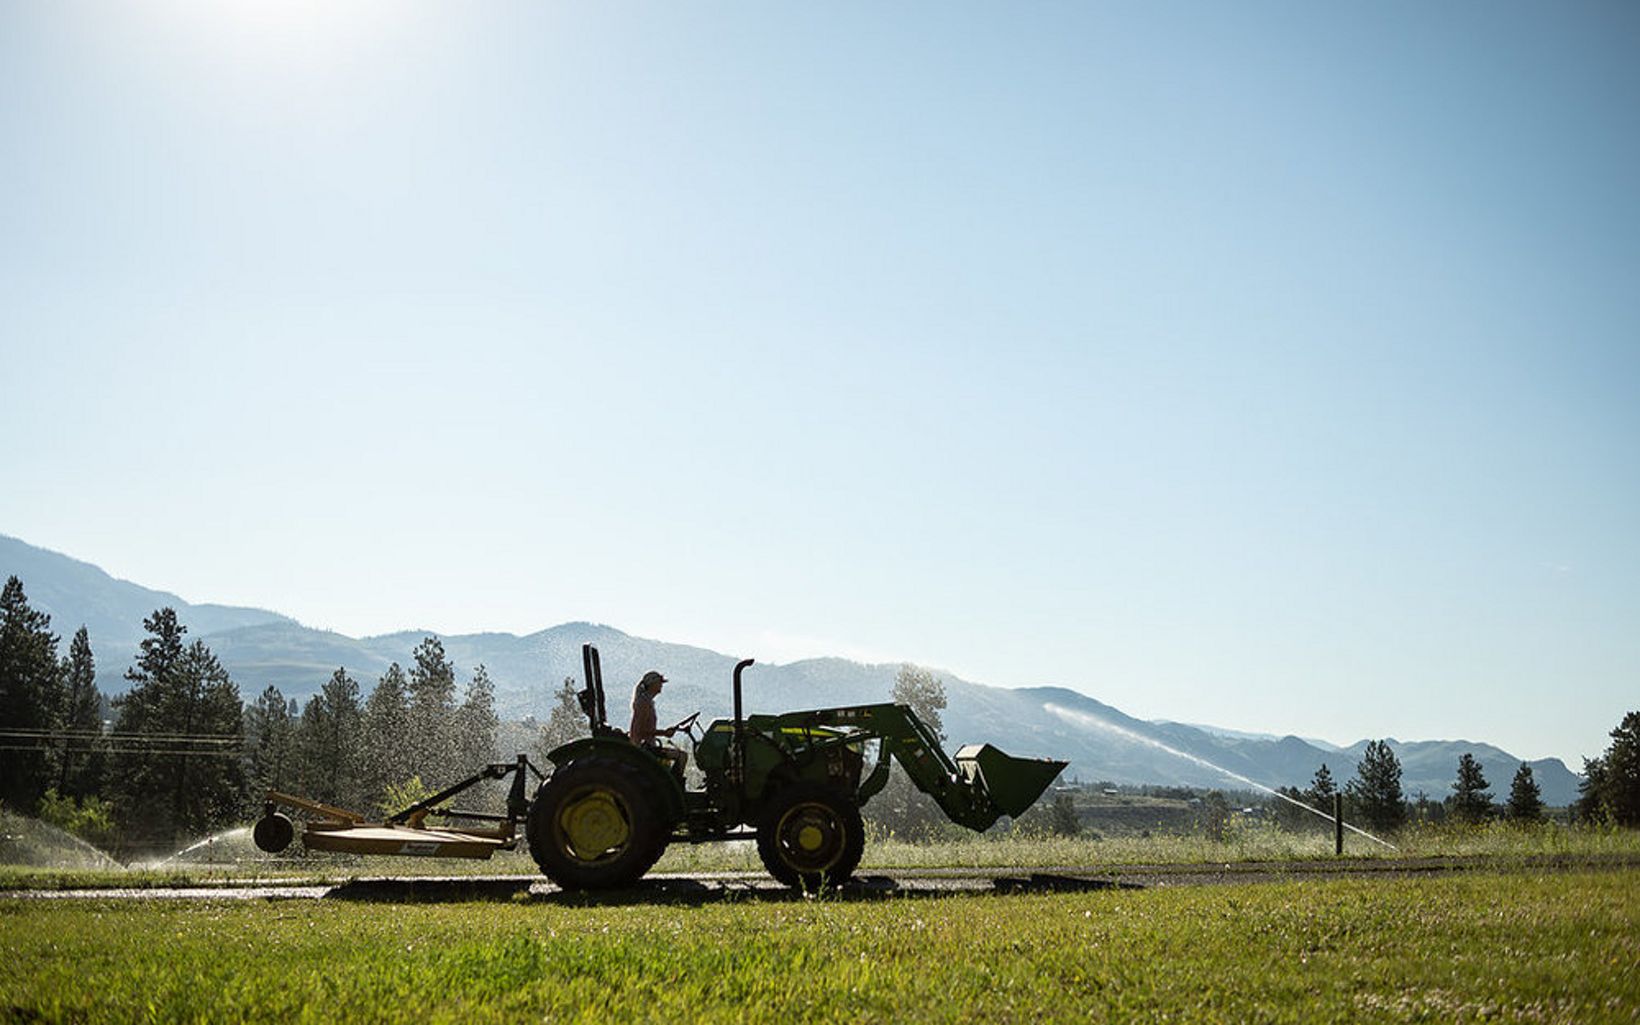 A tractor on a farm near Winthrop, Washington state.